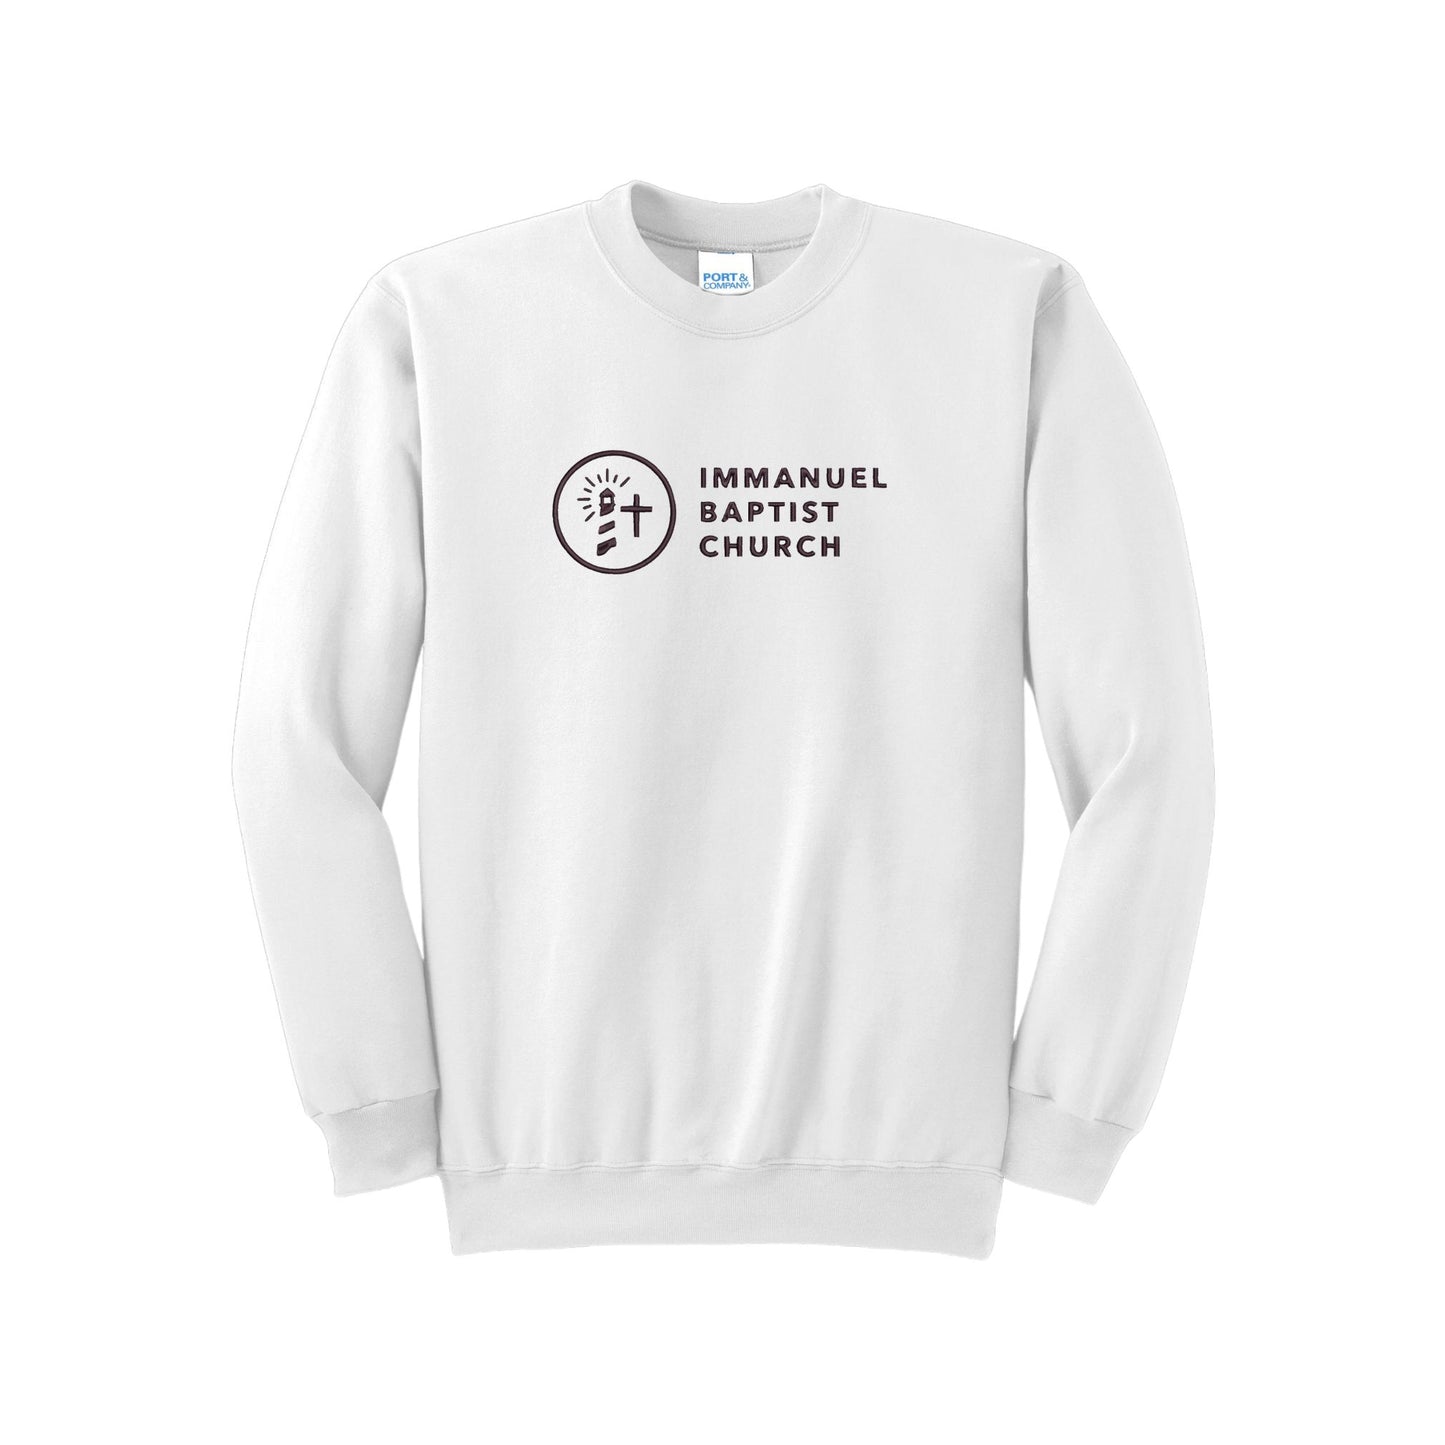 white crewneck sweatshirt with immanuel baptist church embroidered logo